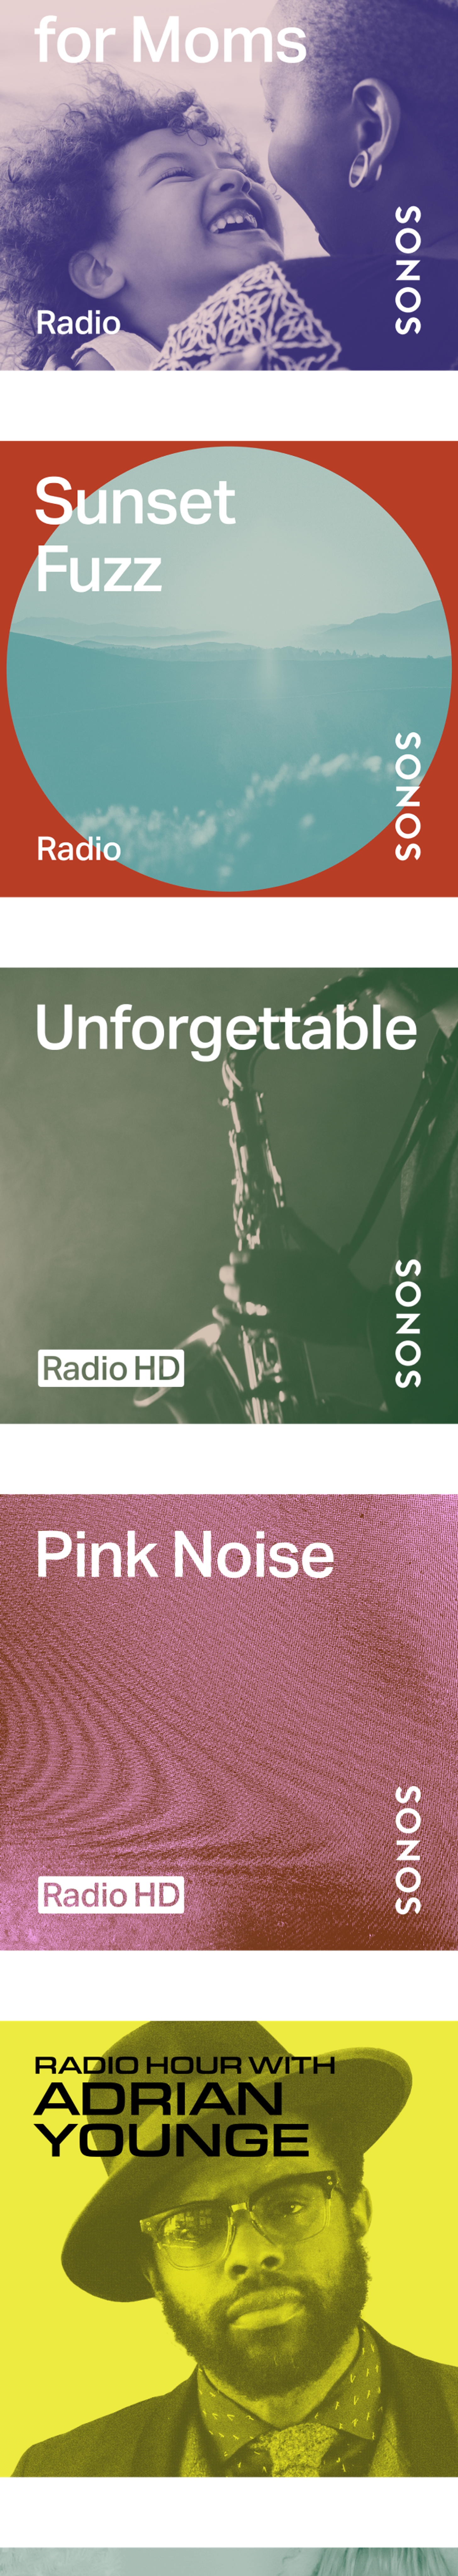 Sonos Radio-stationer